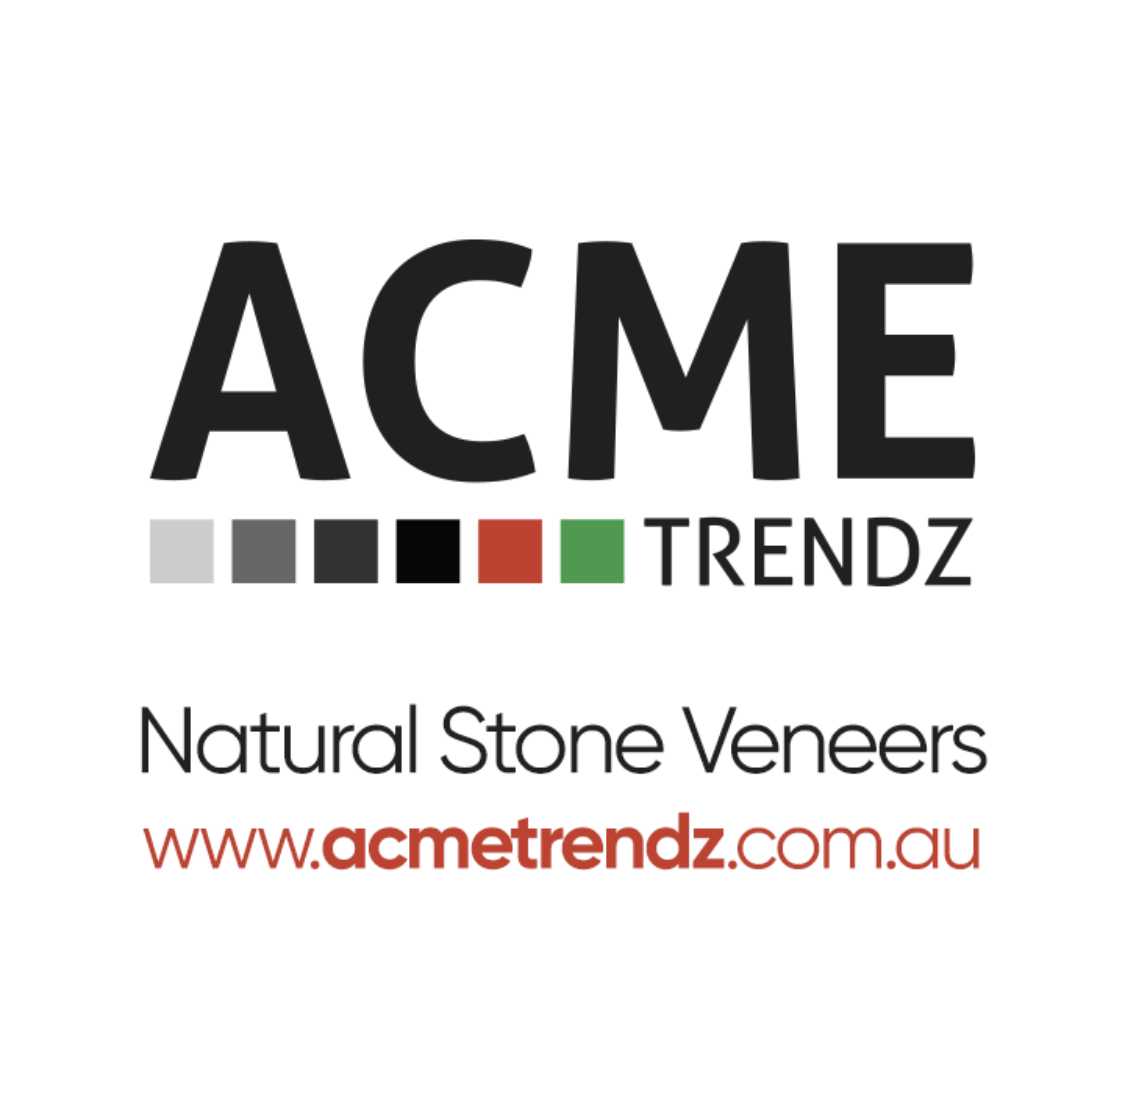 acme trendz - natural stone veneer specialists | interior designing in slacks creek qld